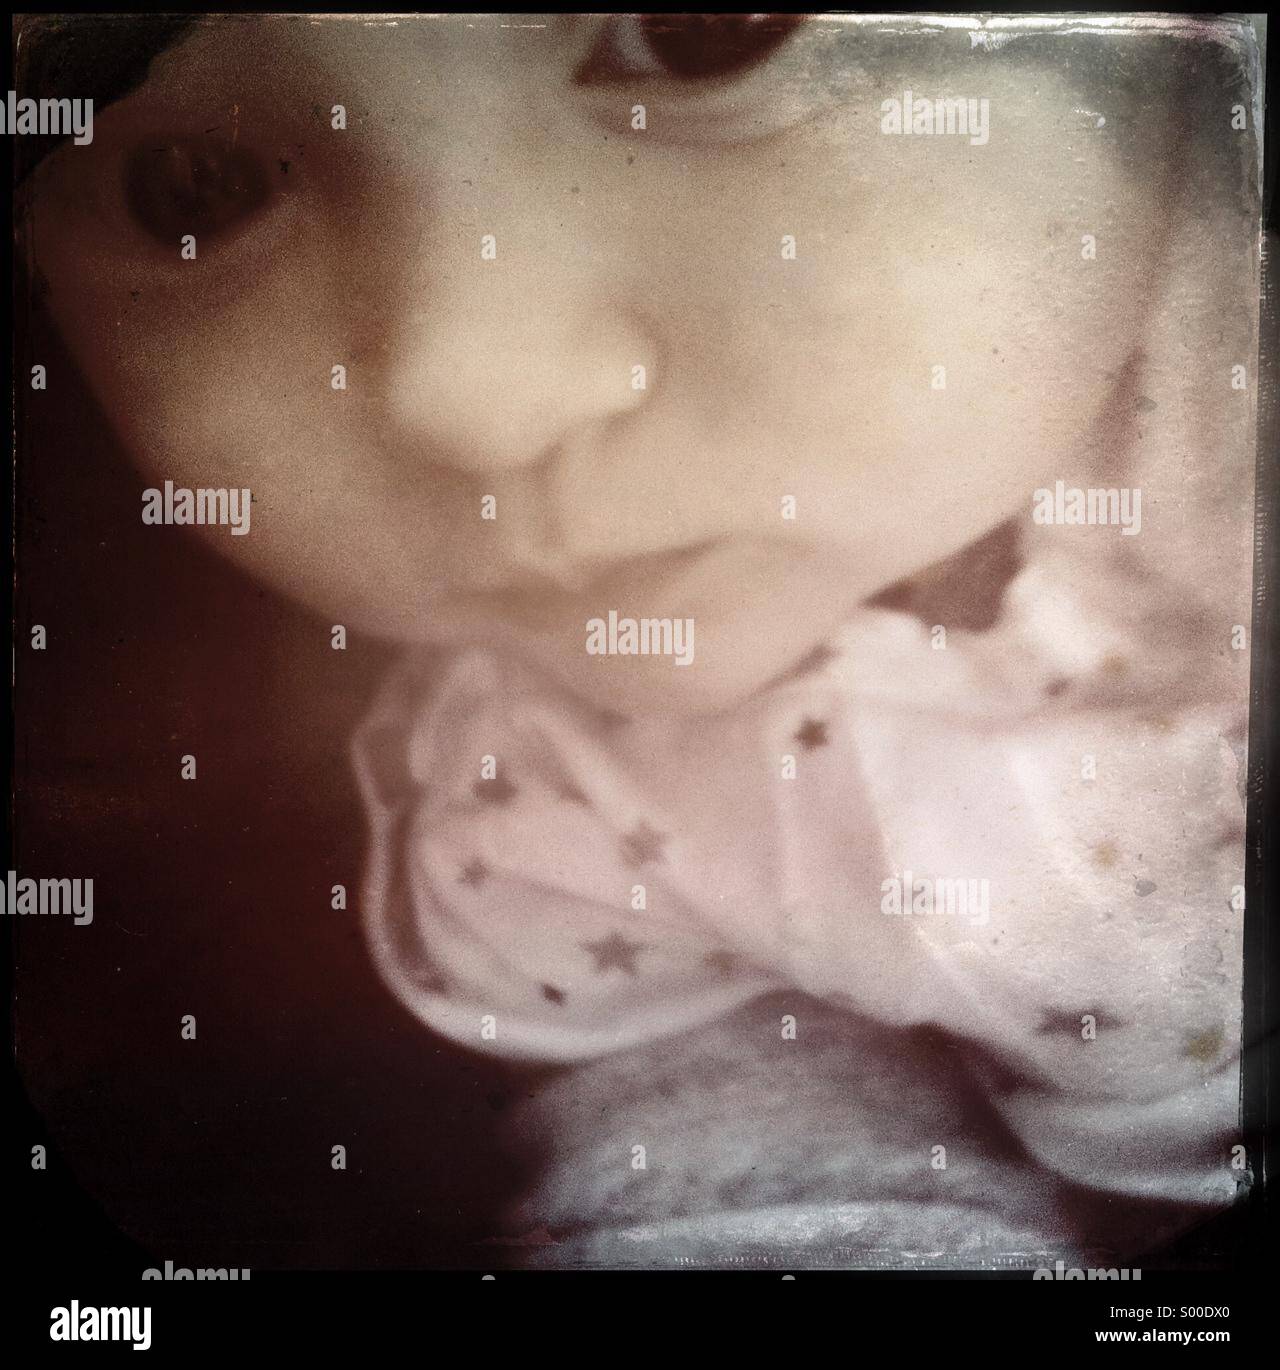 Baby Ruby Hipstamatic image. Stock Photo